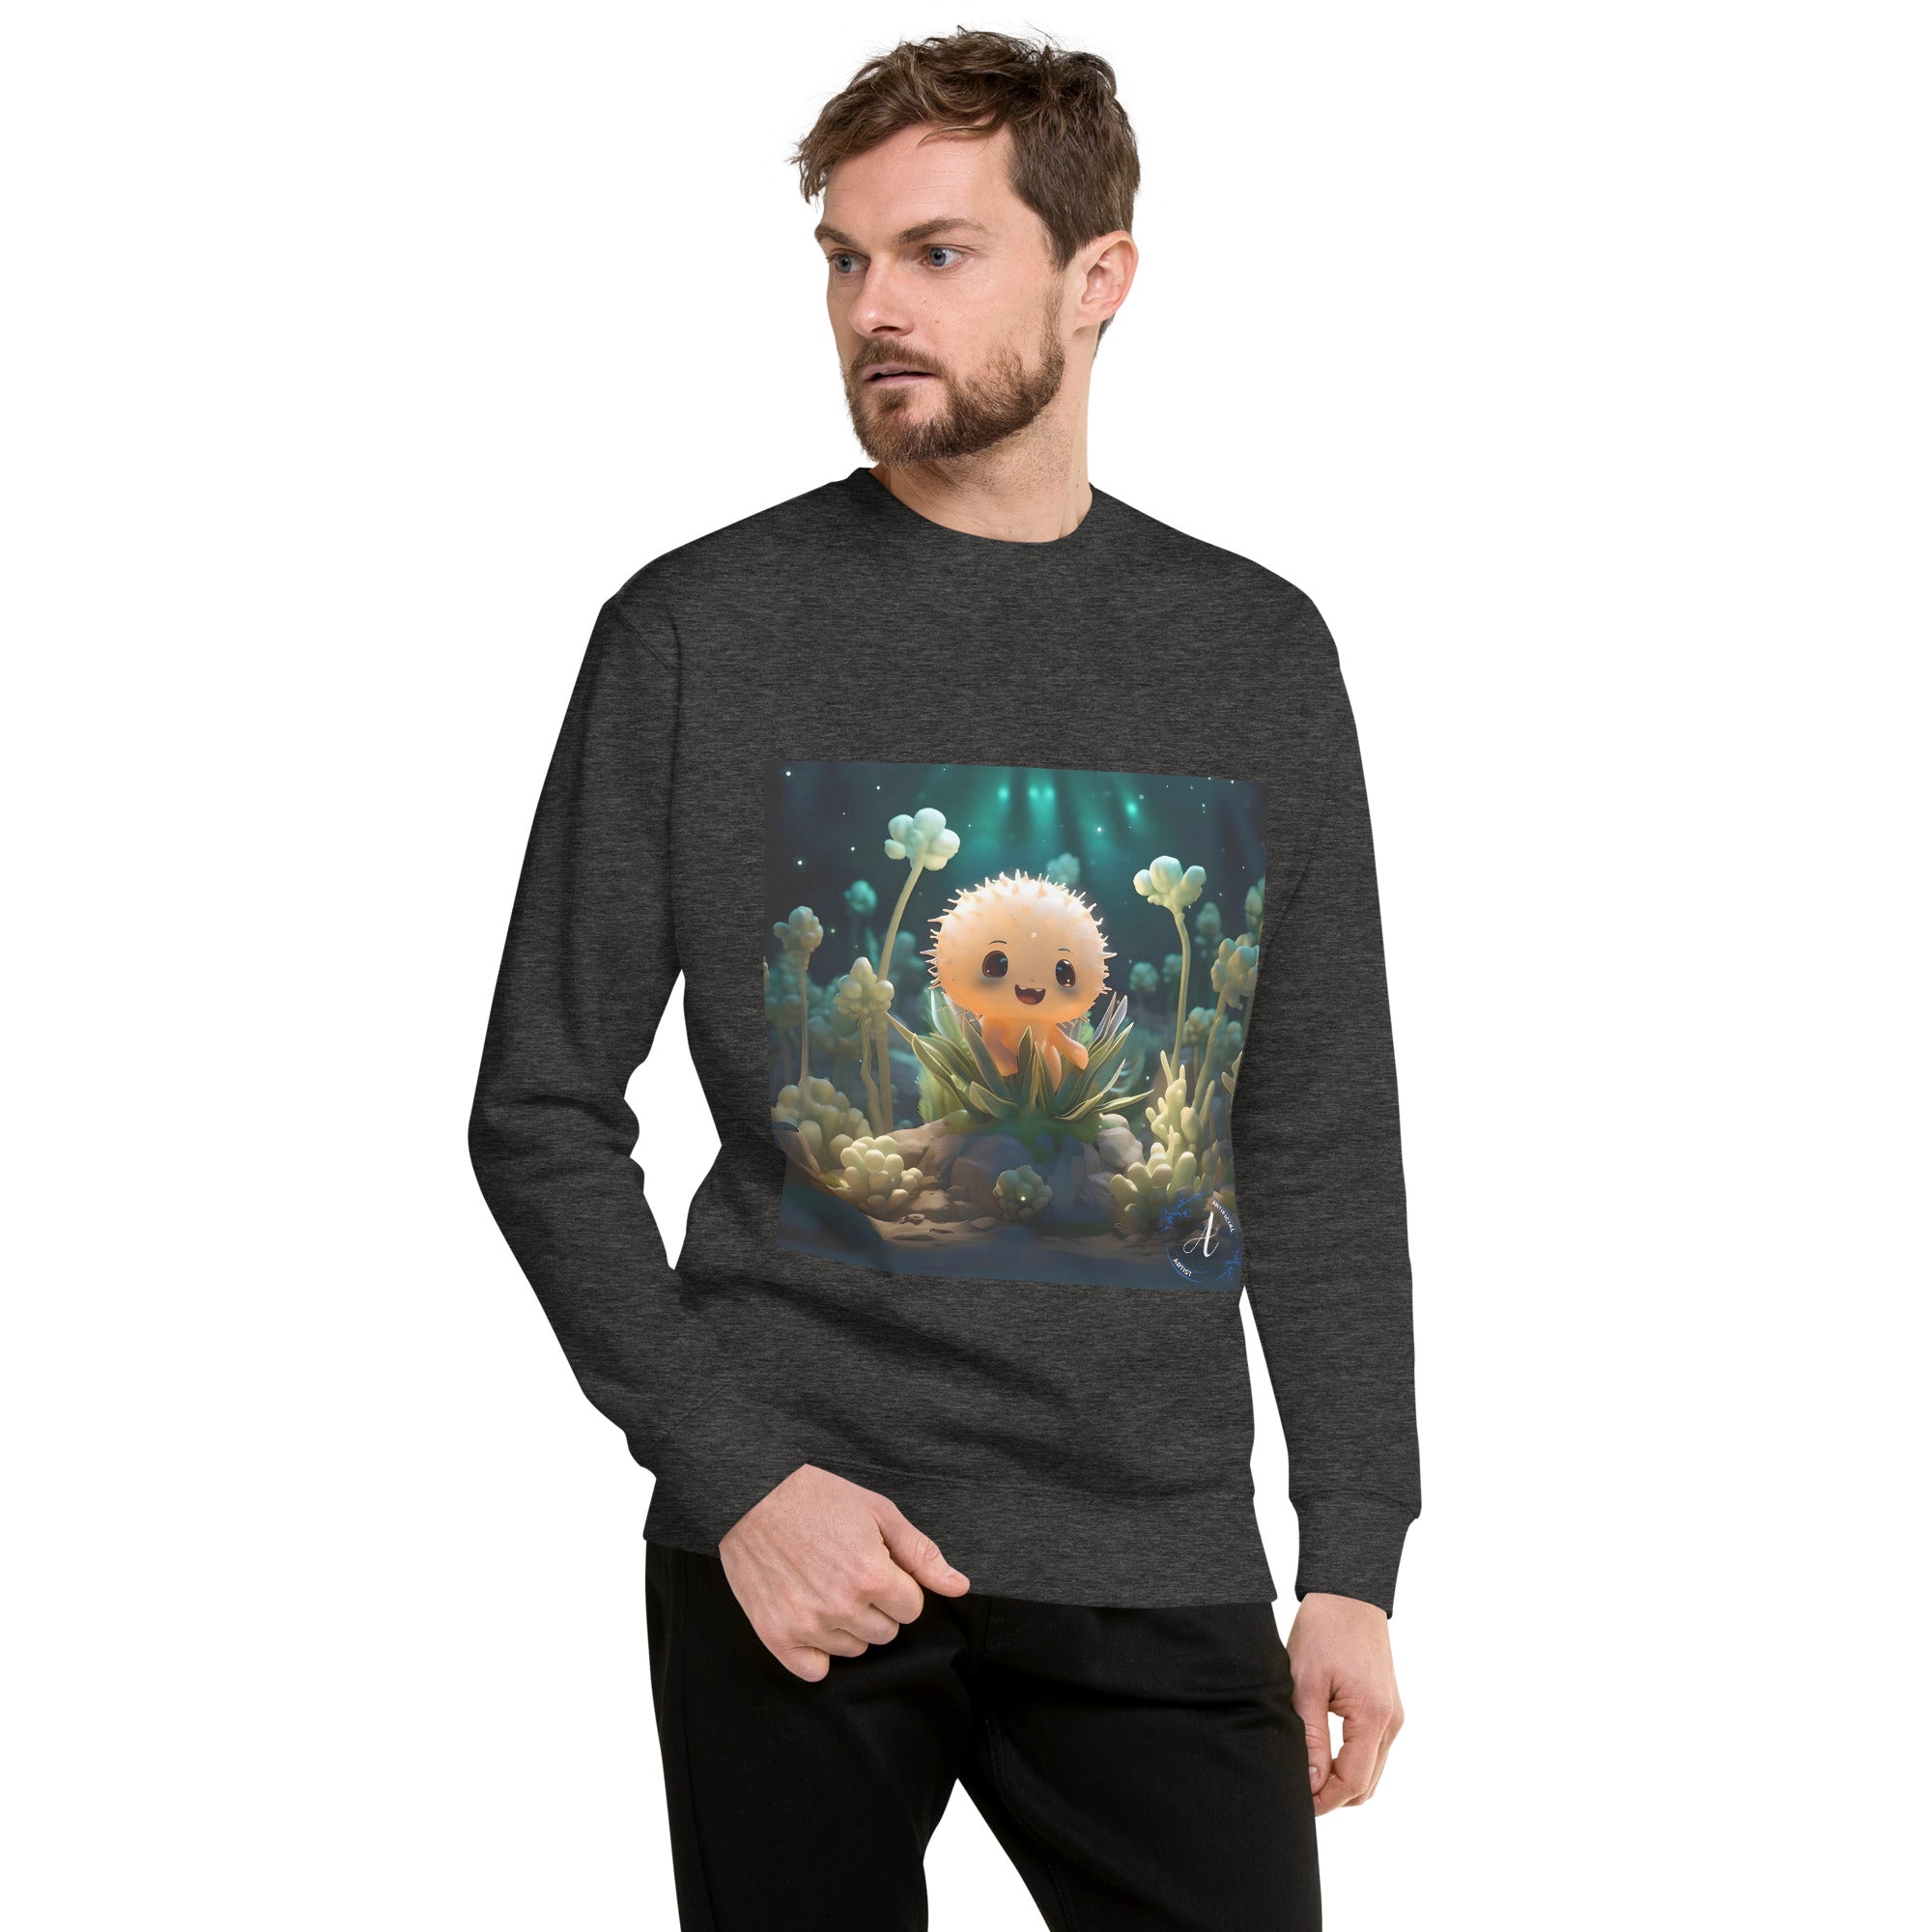 Starry Cactus - Premium Sweatshirt